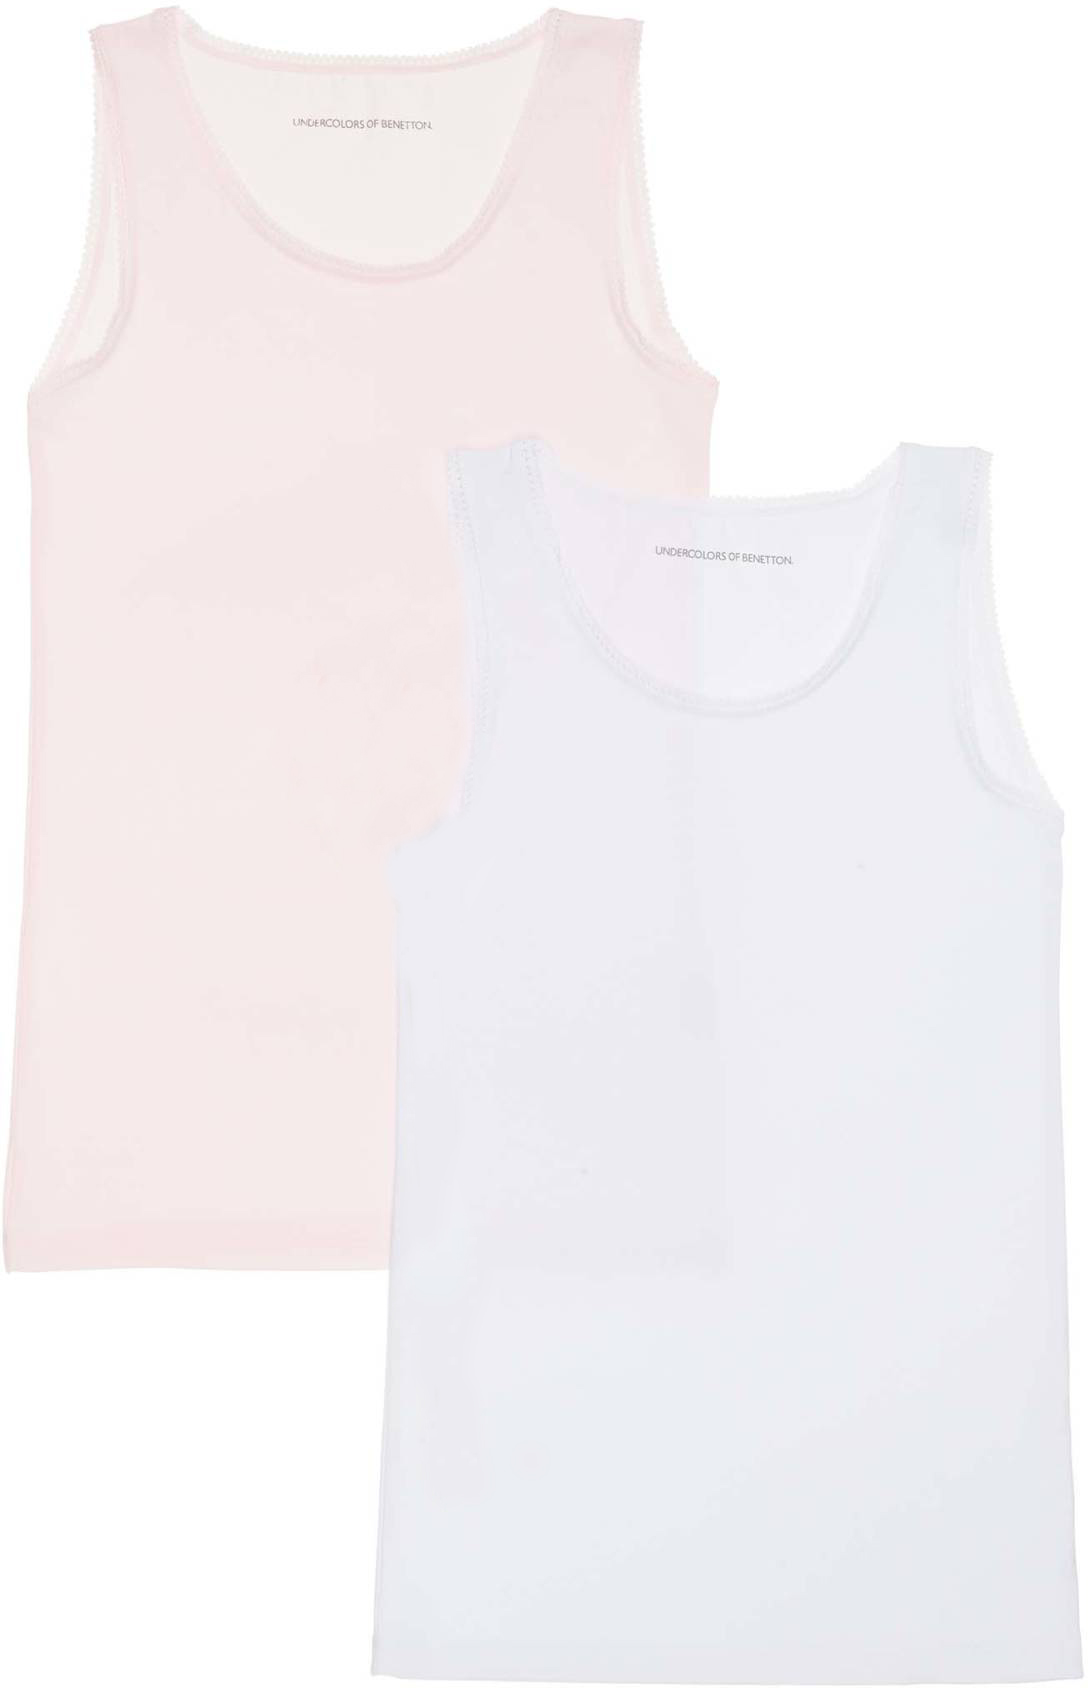 Майка для девочки United Colors of Benetton, цвет: белый, розовый, 2 шт. 3MC10H480_901. Размер 110